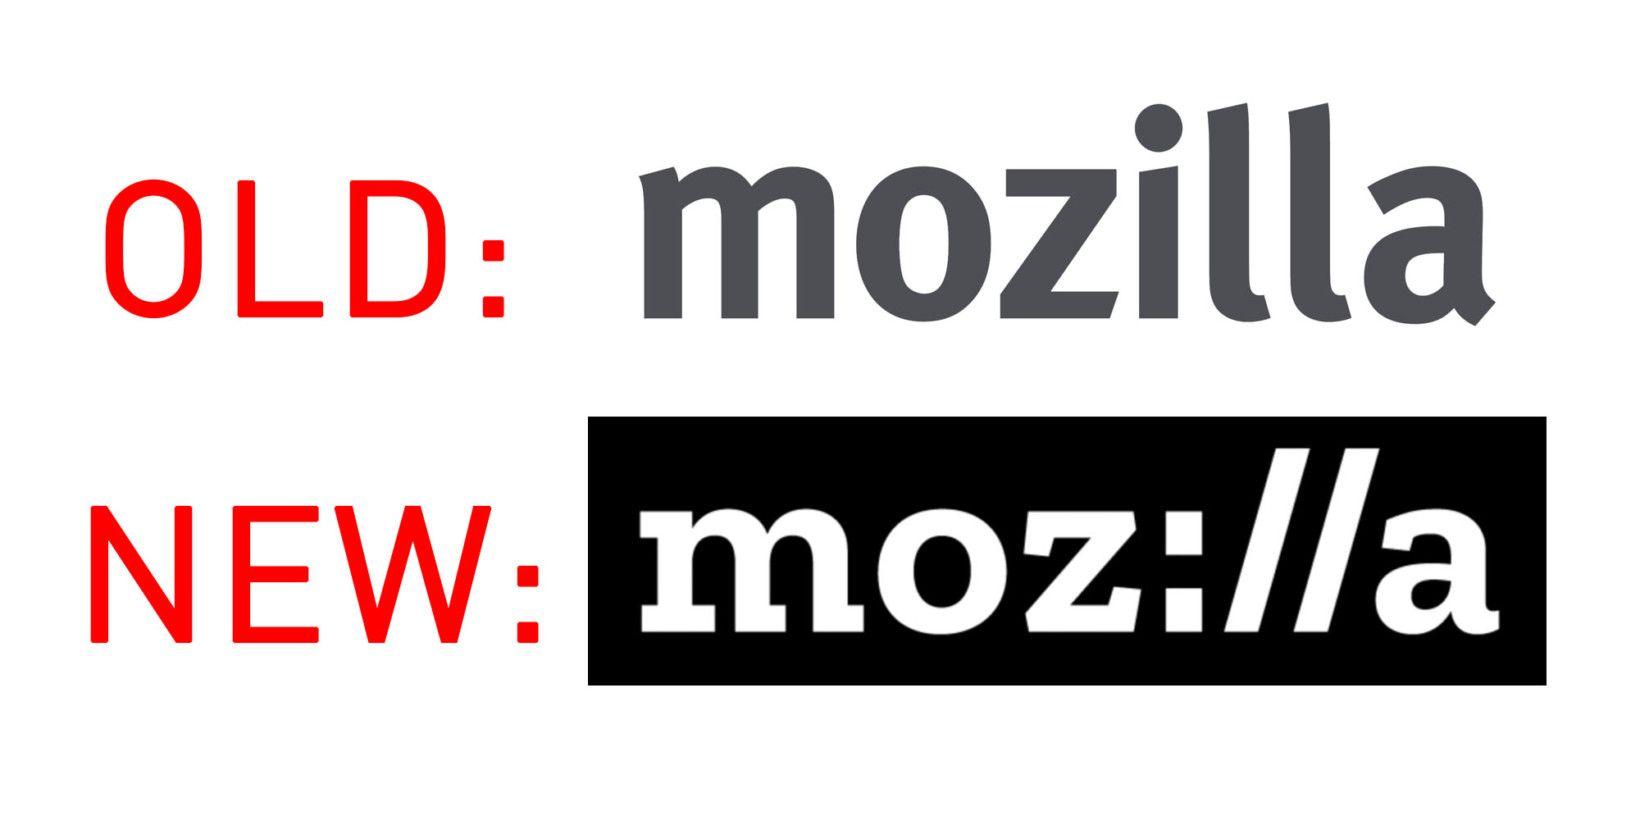 New Mozilla Logo - Mozilla just revealed a minimalist new logo